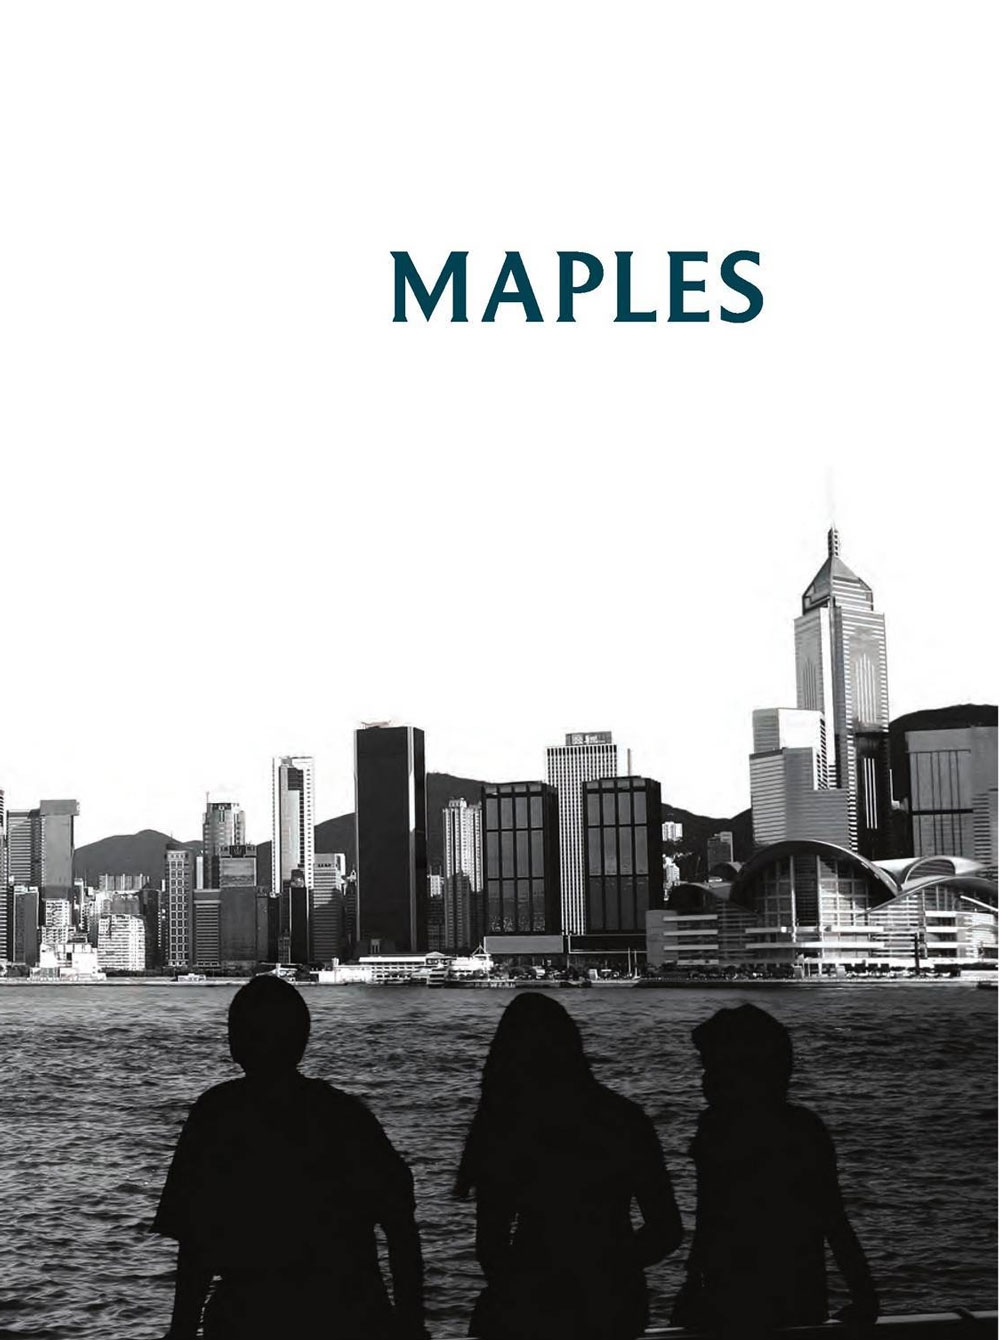 Maples Visual Identity Manual